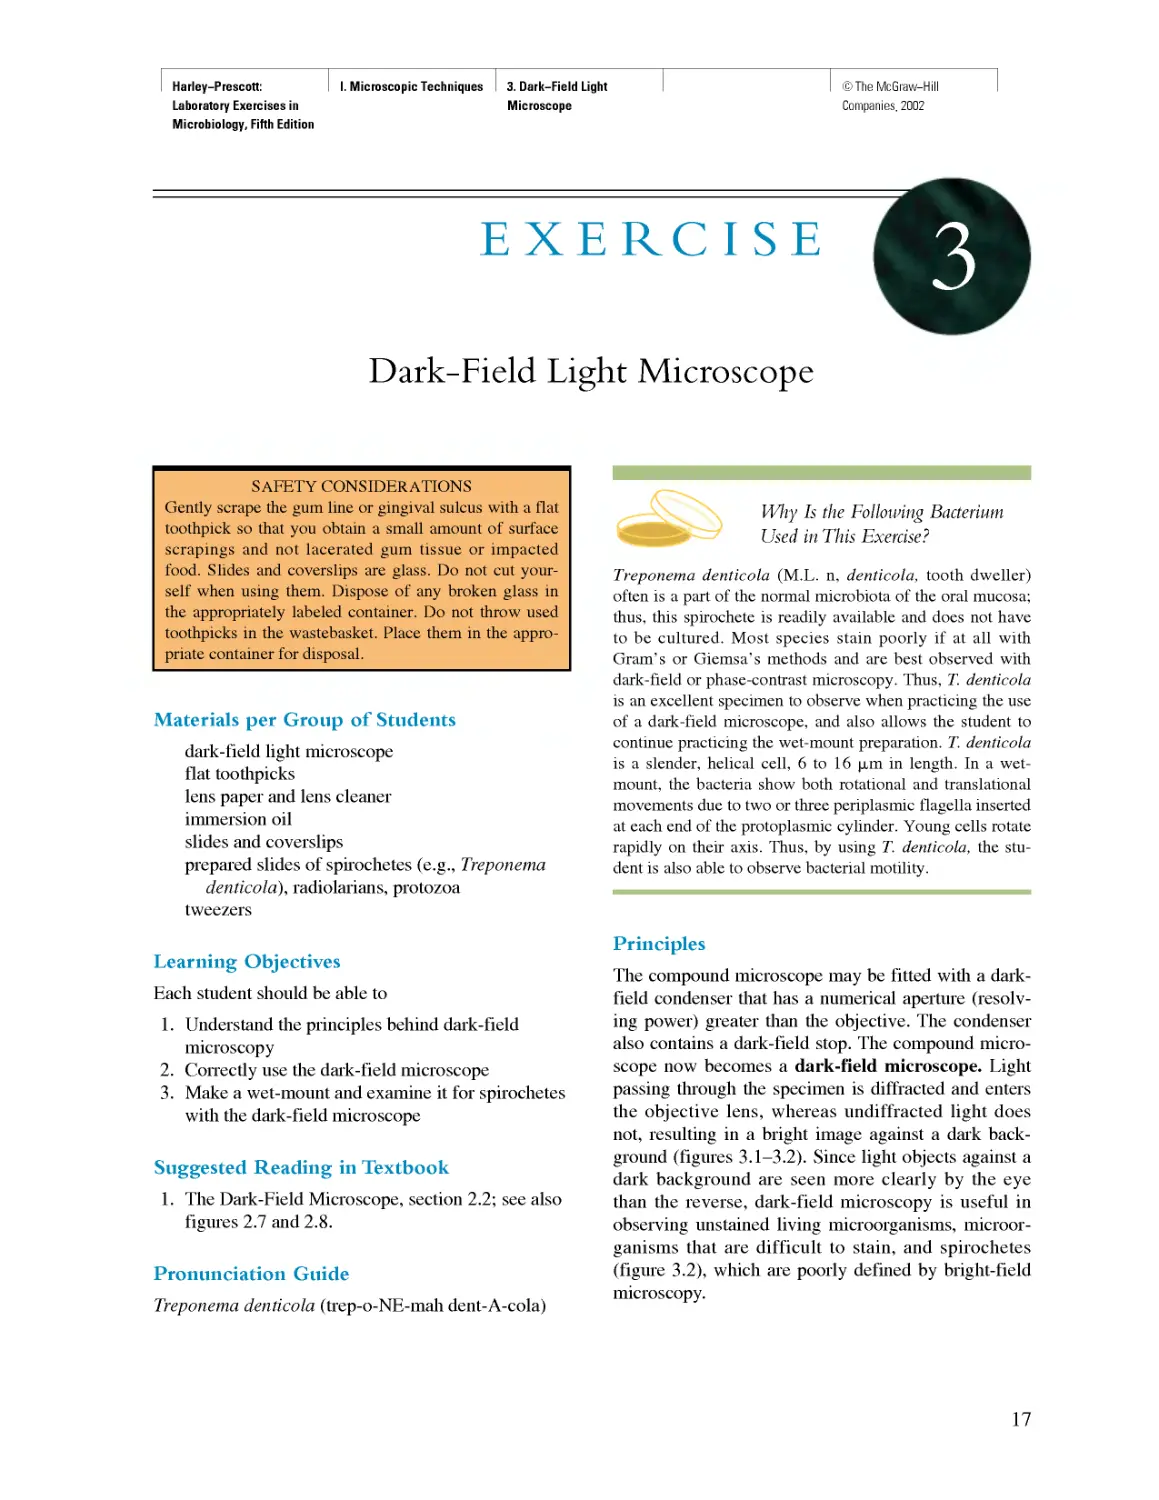 3. Dark-Field Light Microscope